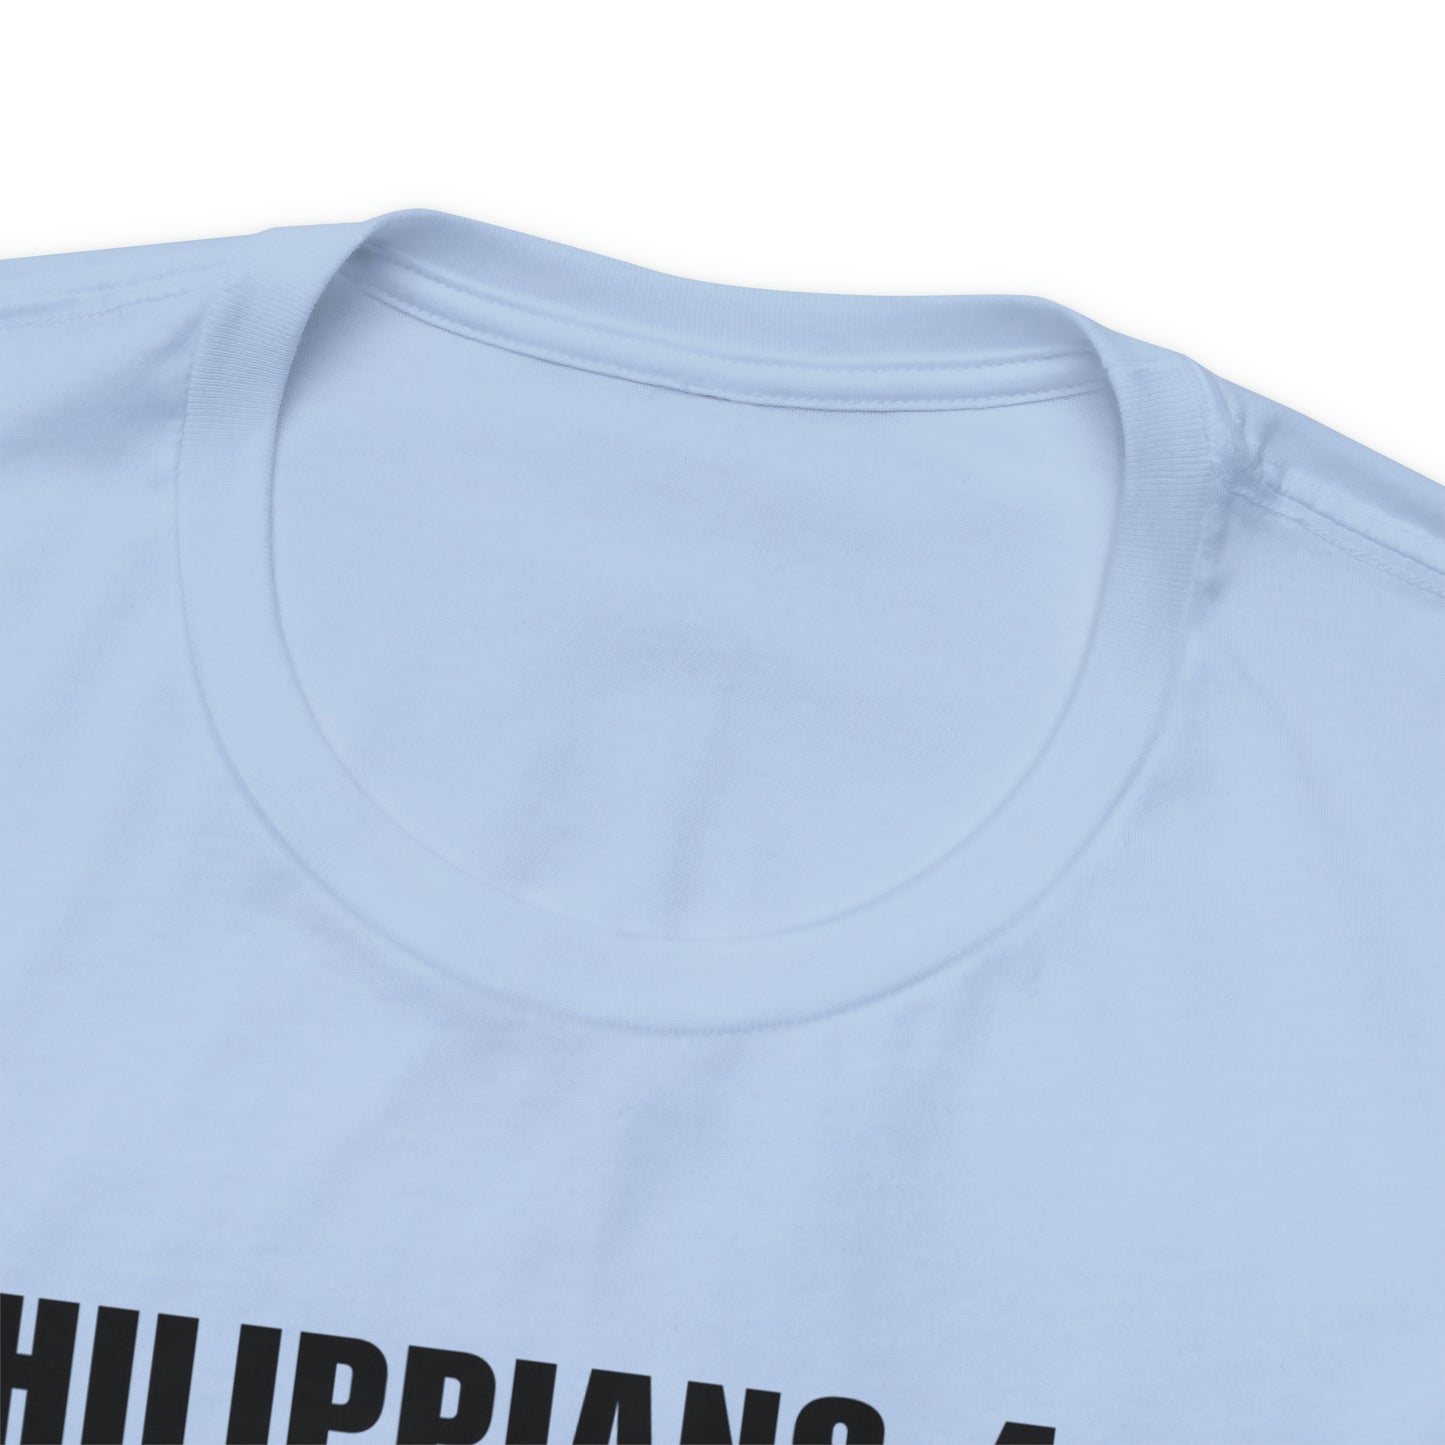 Philippians 4:13 Christian T-Shirt For Women